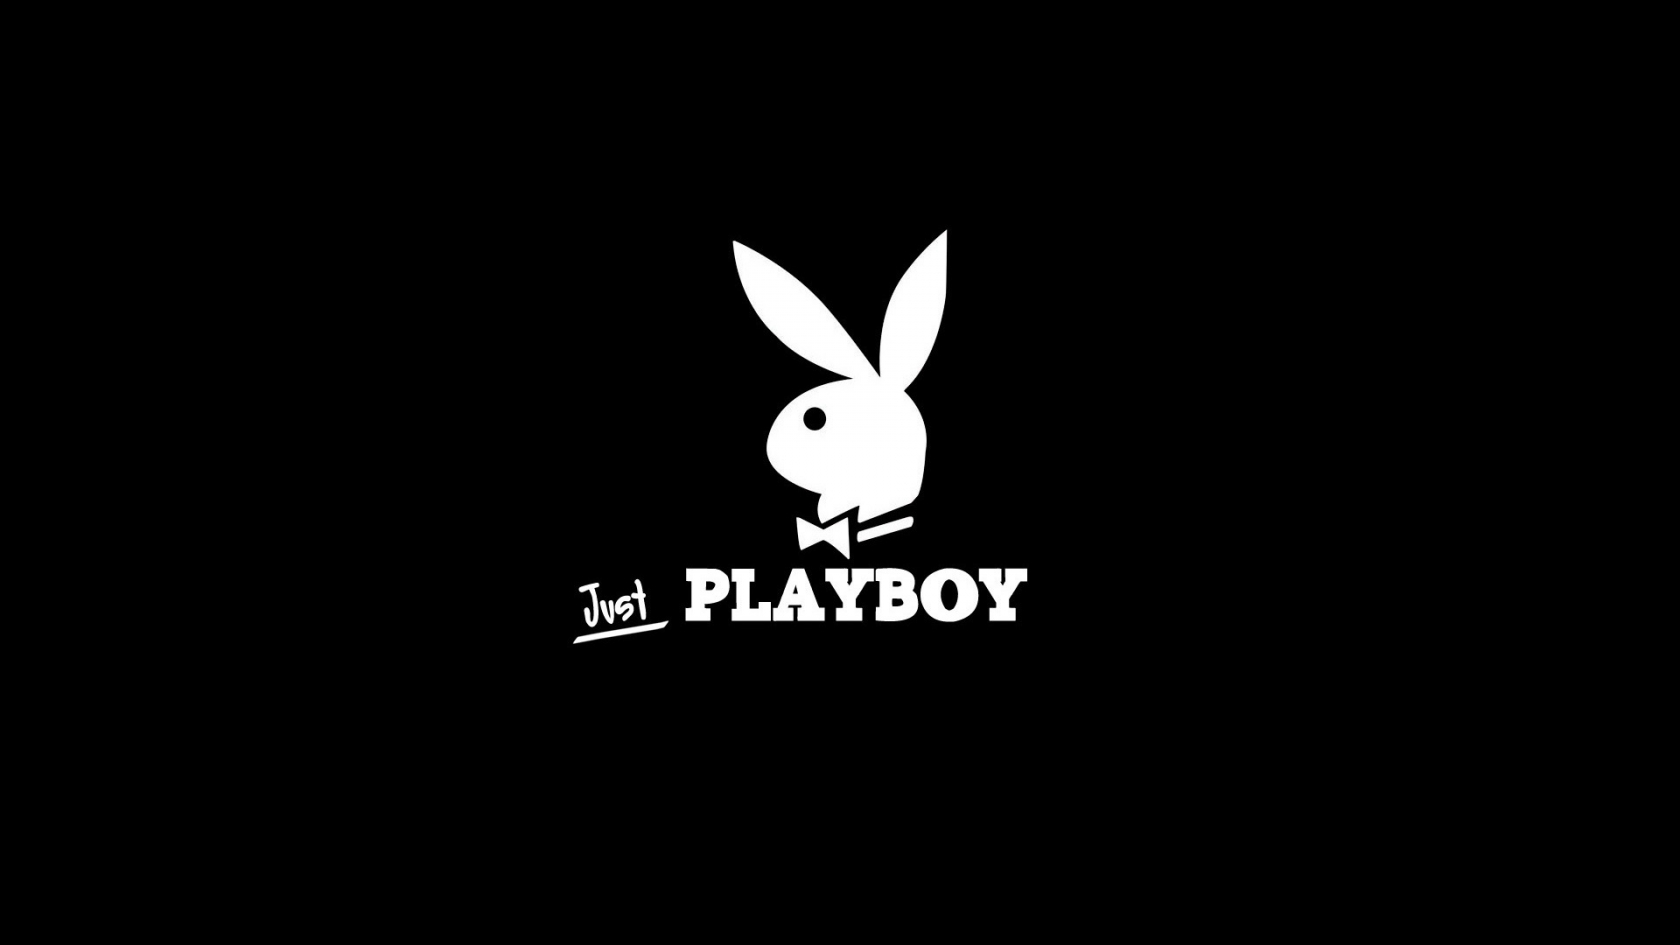 Playboy Logo for 1680 x 945 HDTV resolution